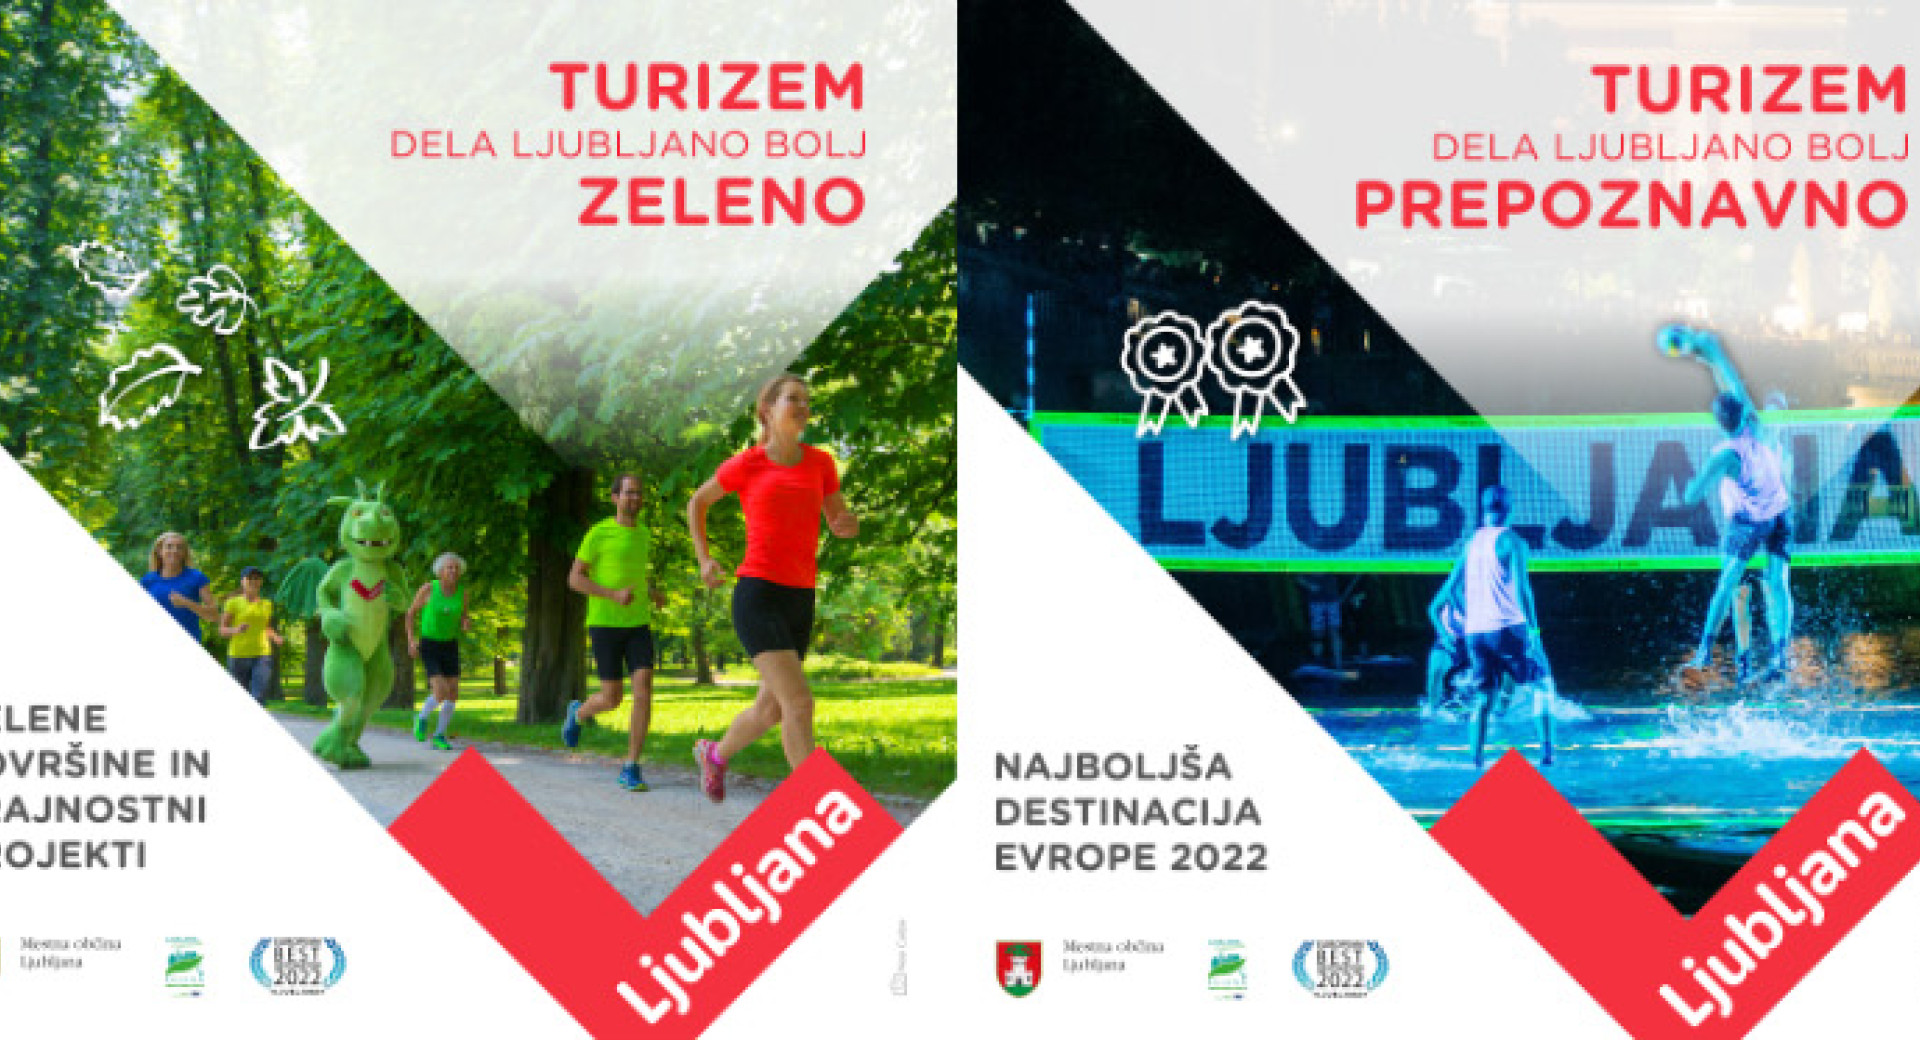 Kampanja Turizma Ljubljana Turizem dela Ljubljano 2022 - oglasi kampanje